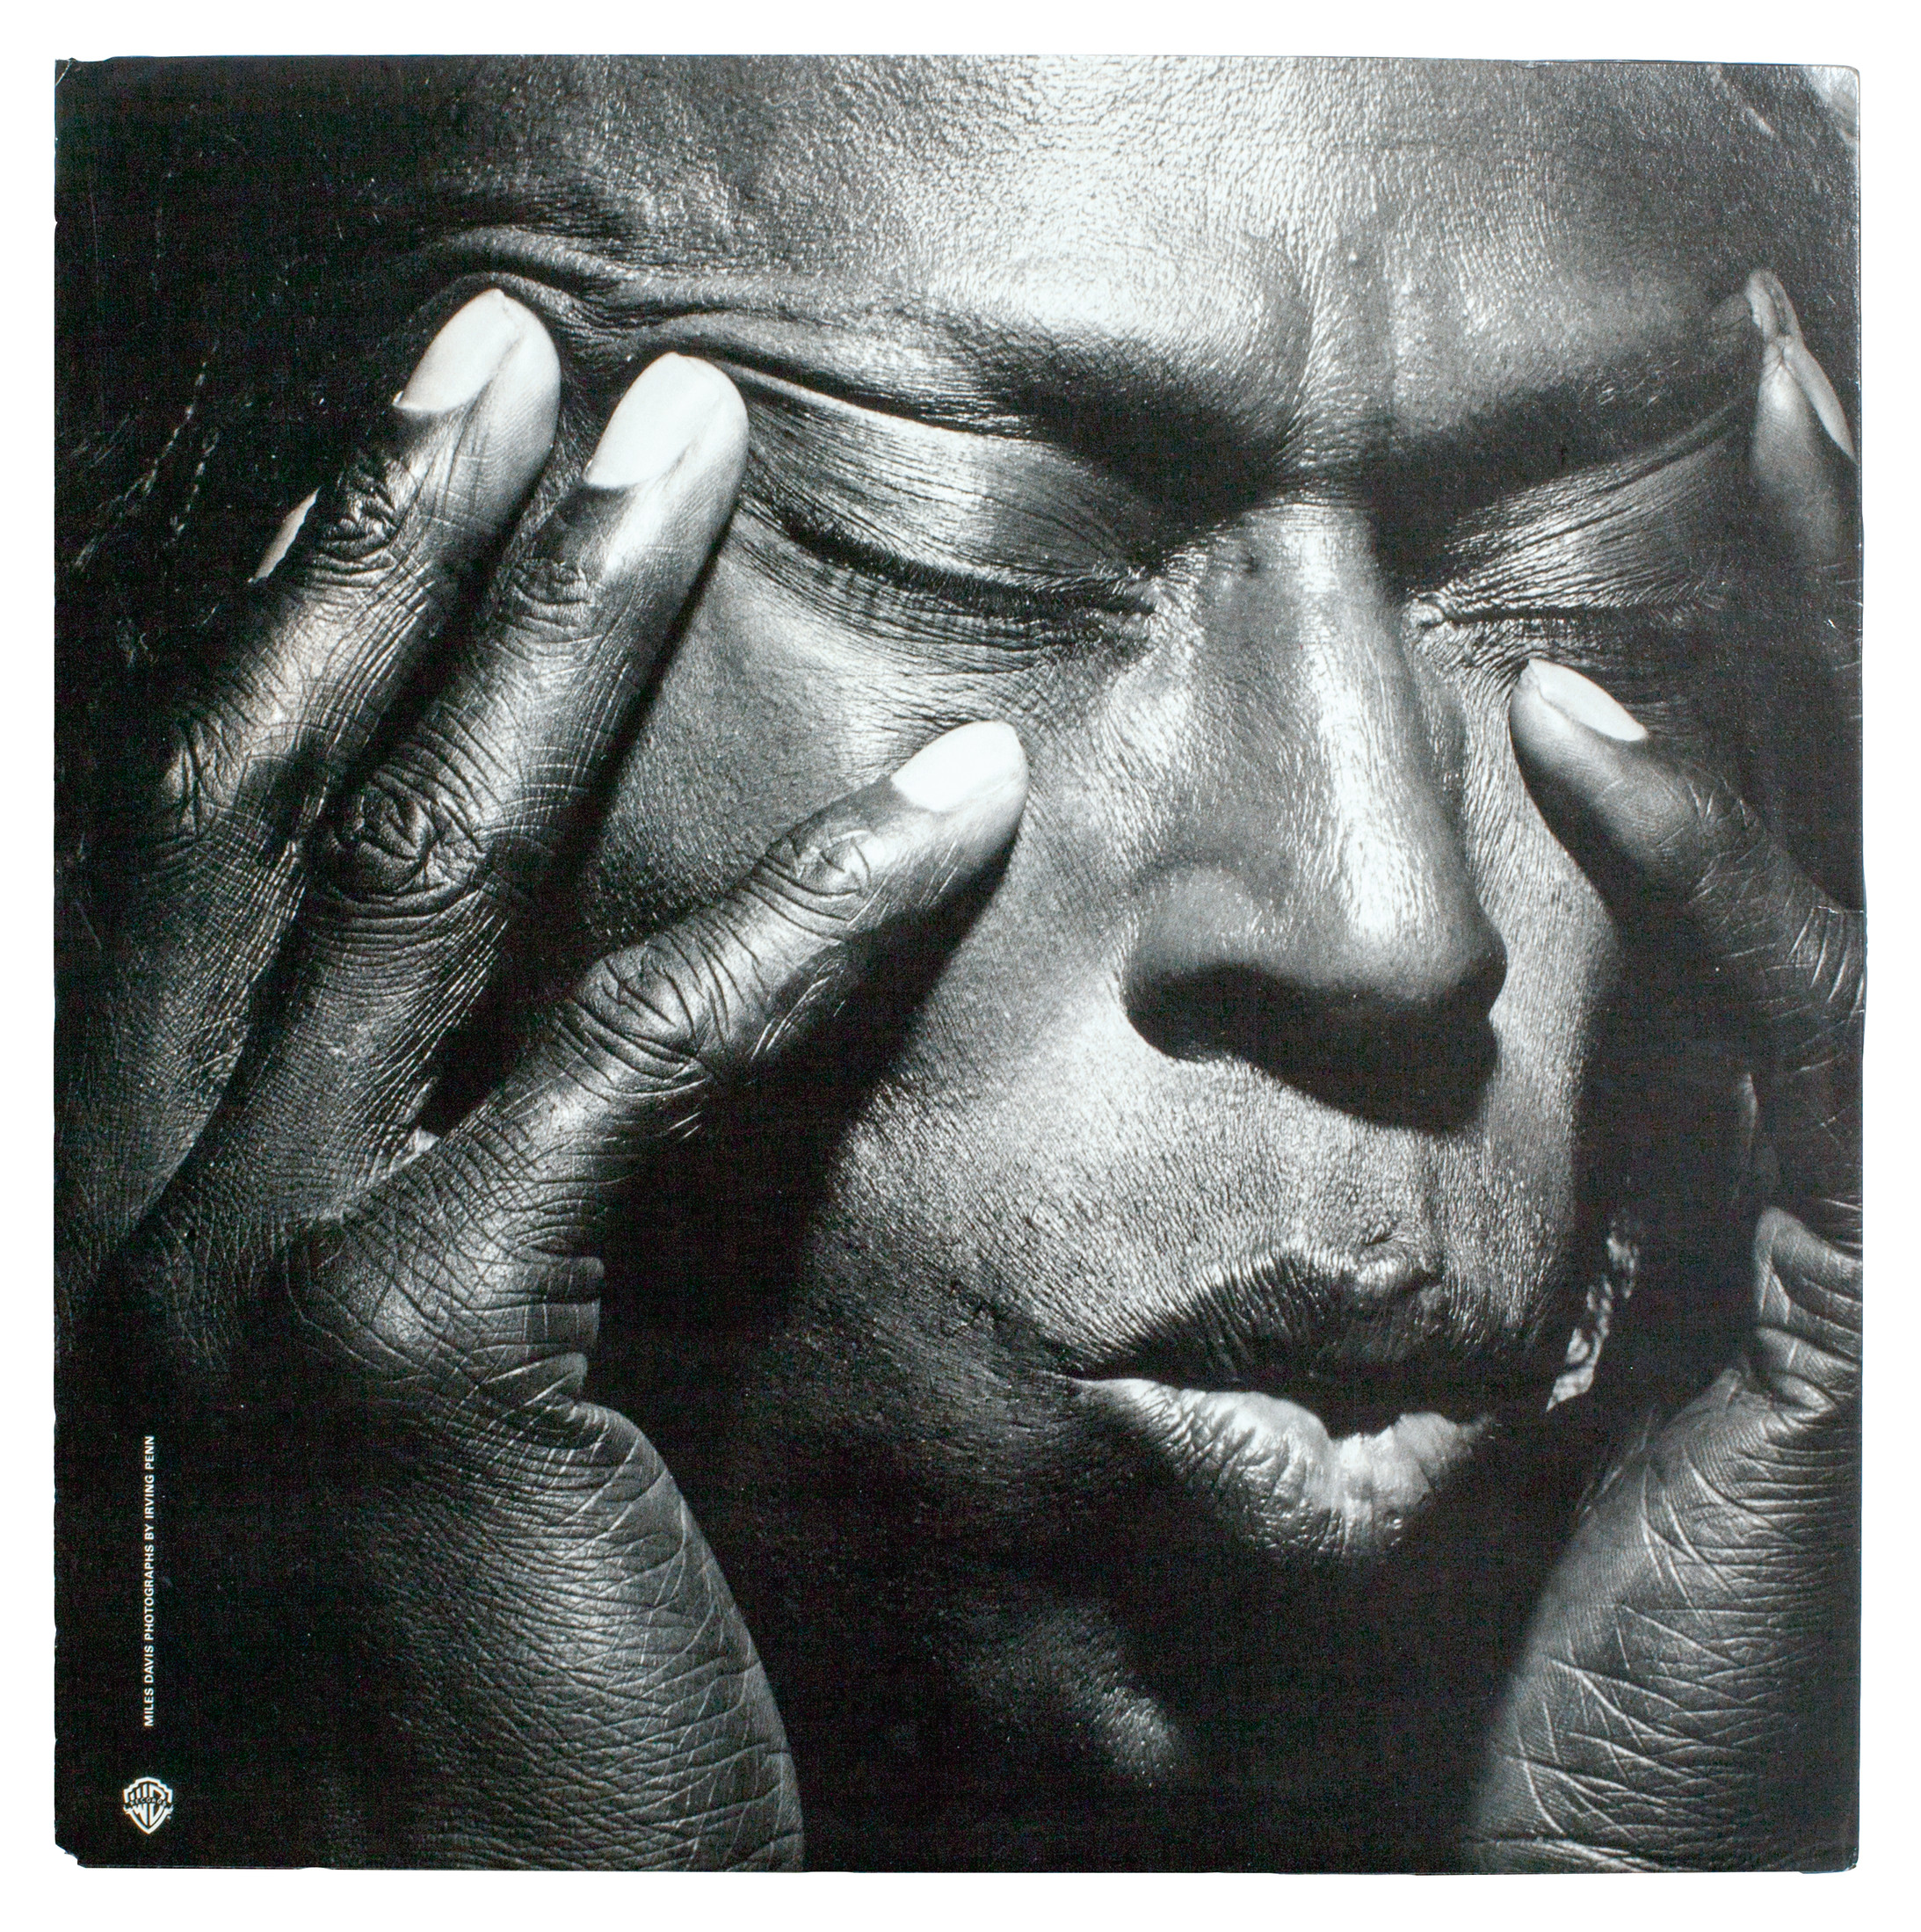 Miles Davis, Tutu
Photographer: Irving Penn